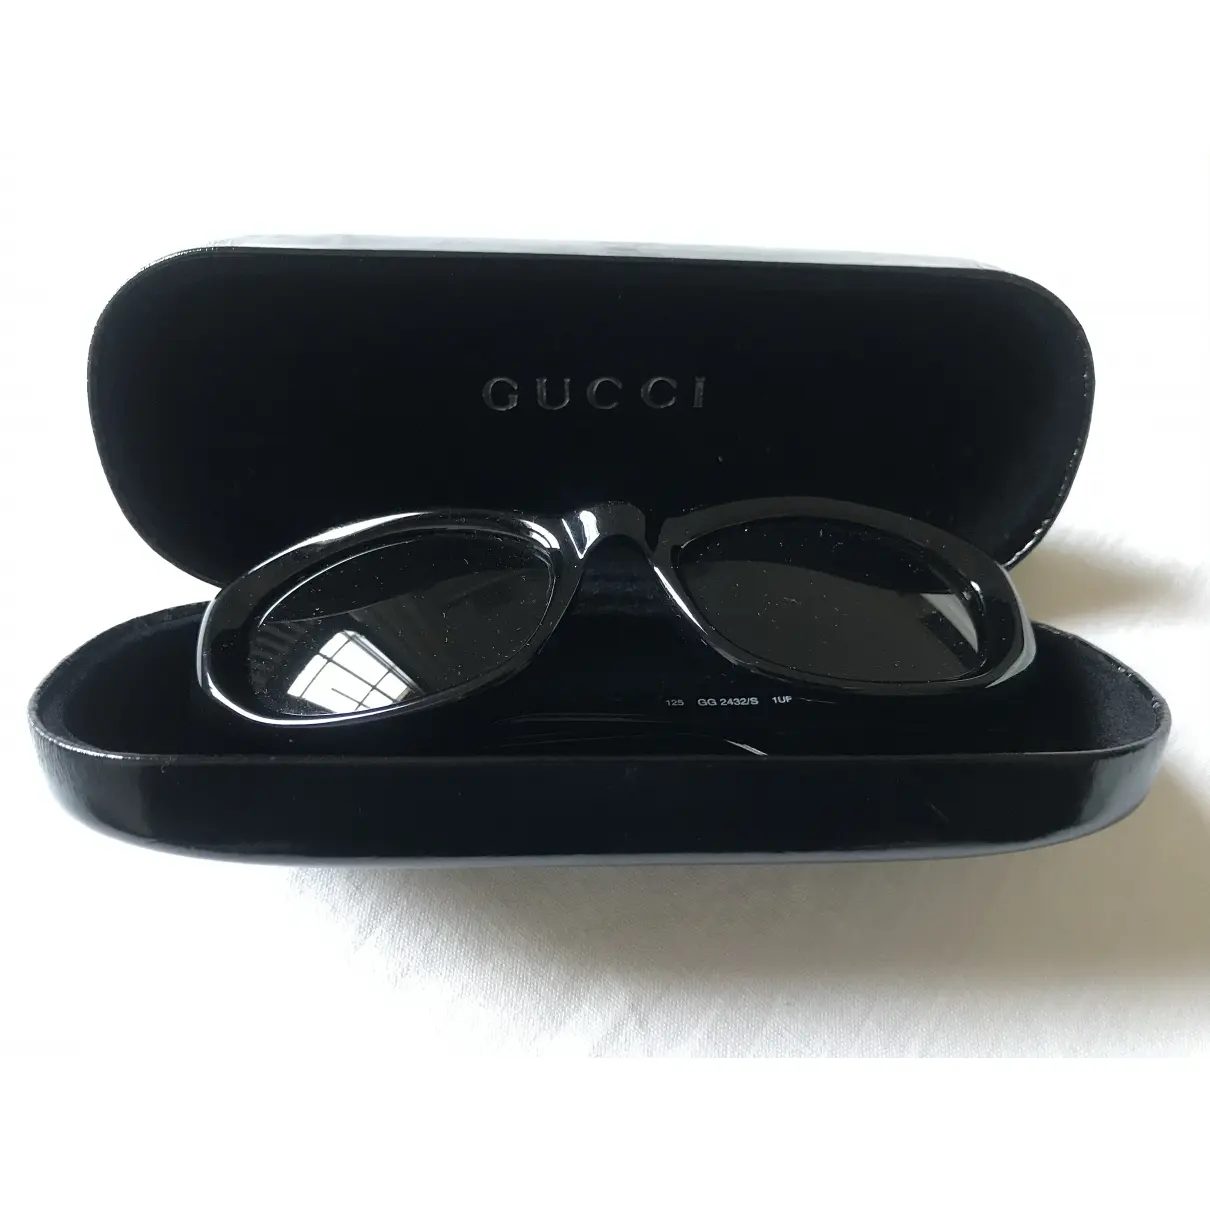 Buy Gucci Sunglasses online - Vintage